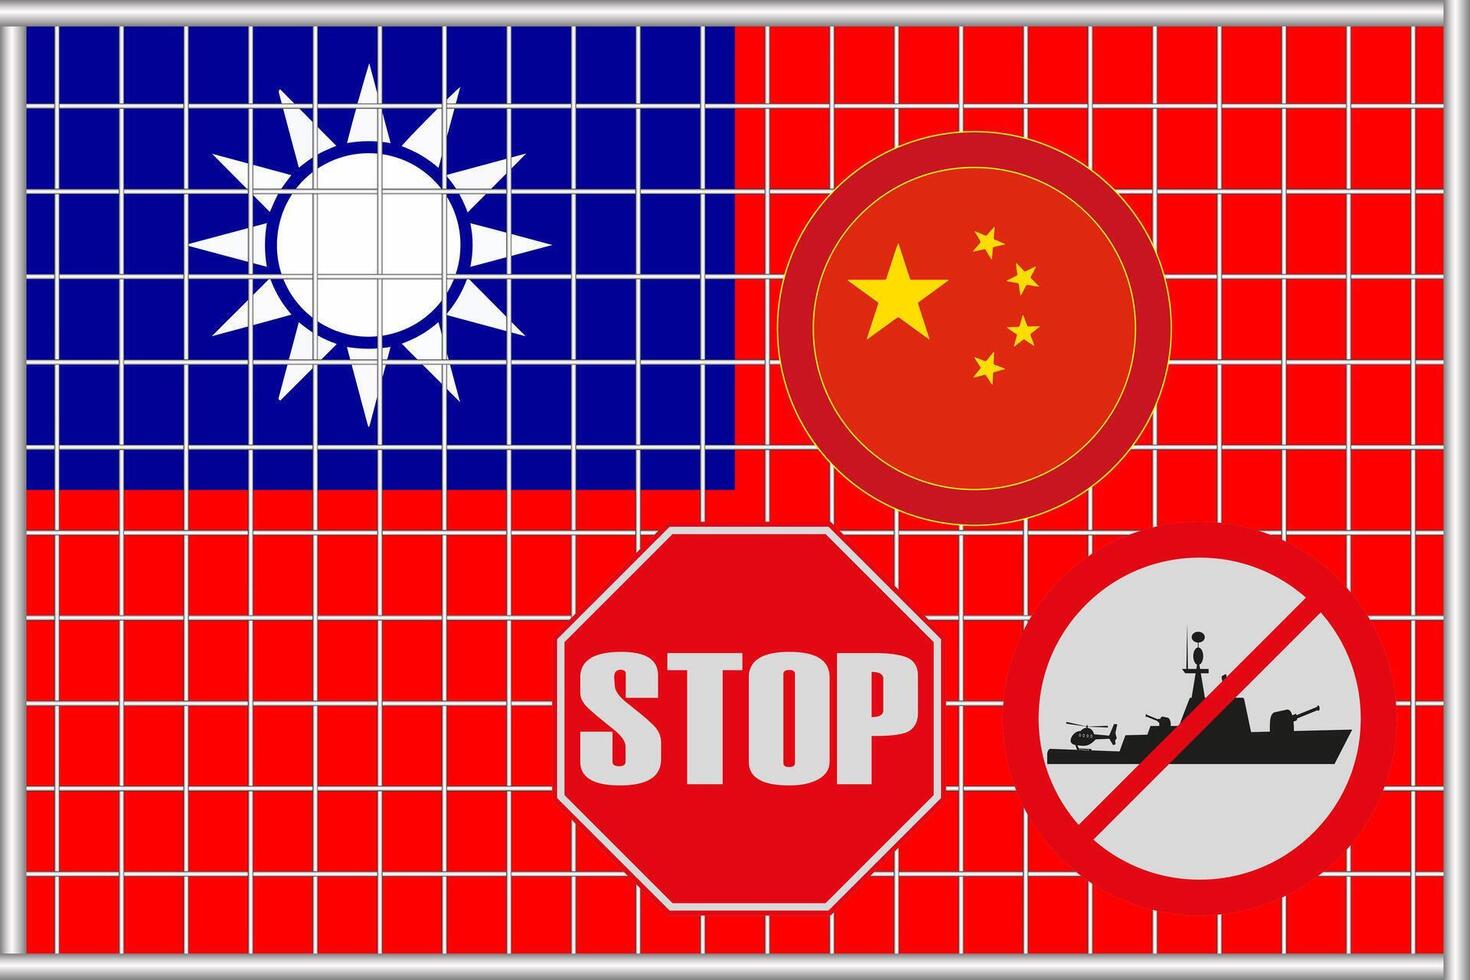 vektor illustration av de flagga av taiwan under de gitter. begrepp av isolationism. Nej krig.